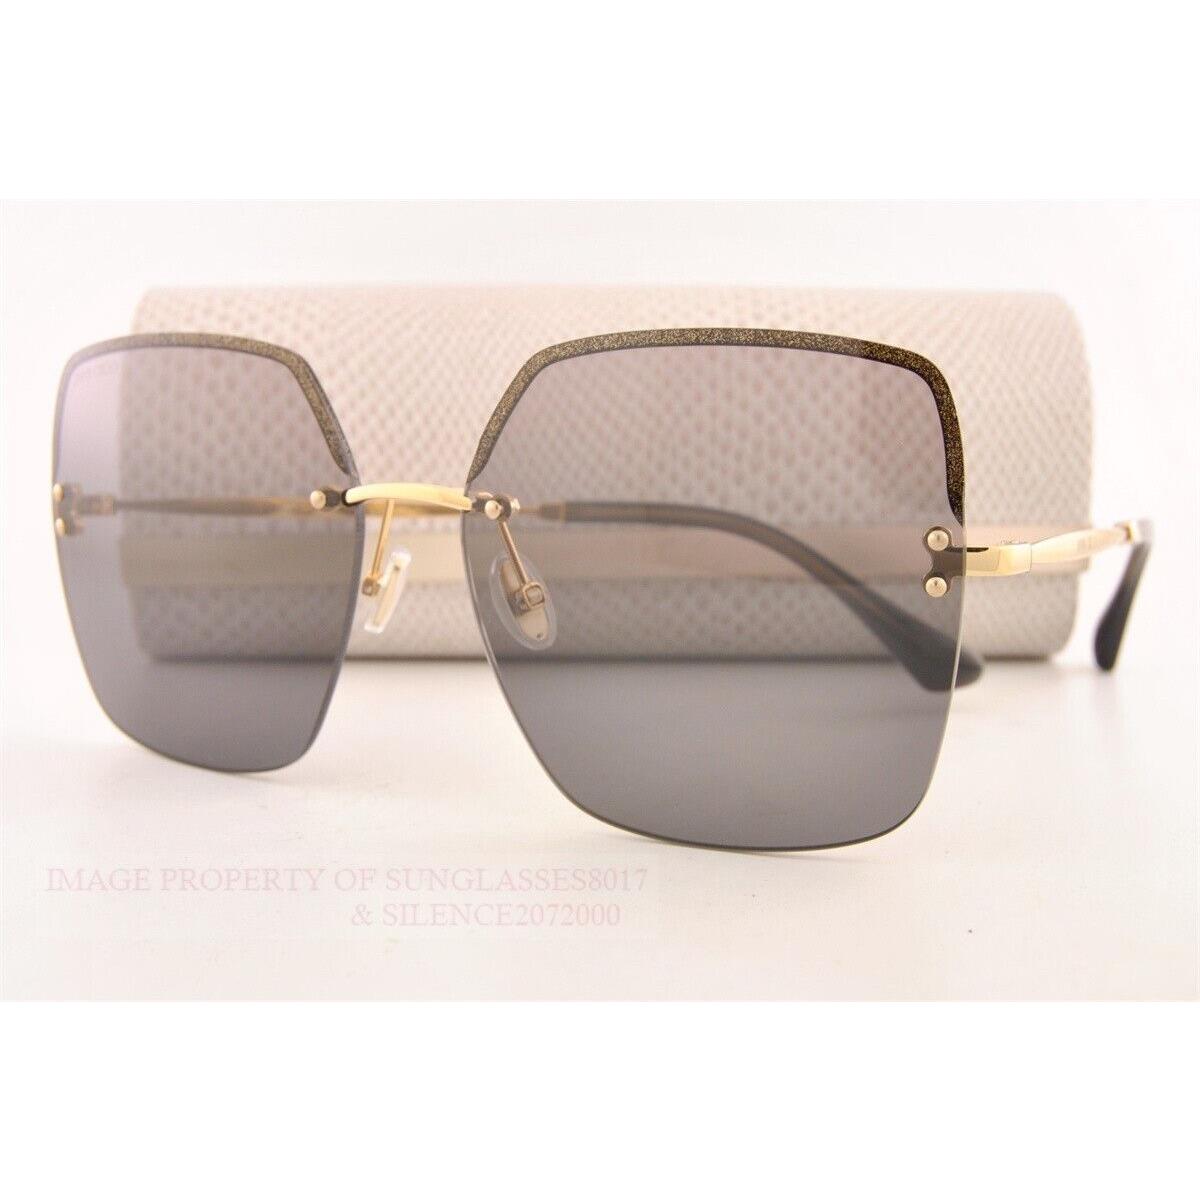 Jimmy Choo Sunglasses Tavi/s 2F7 Gold Grey/grey Shaded For Women